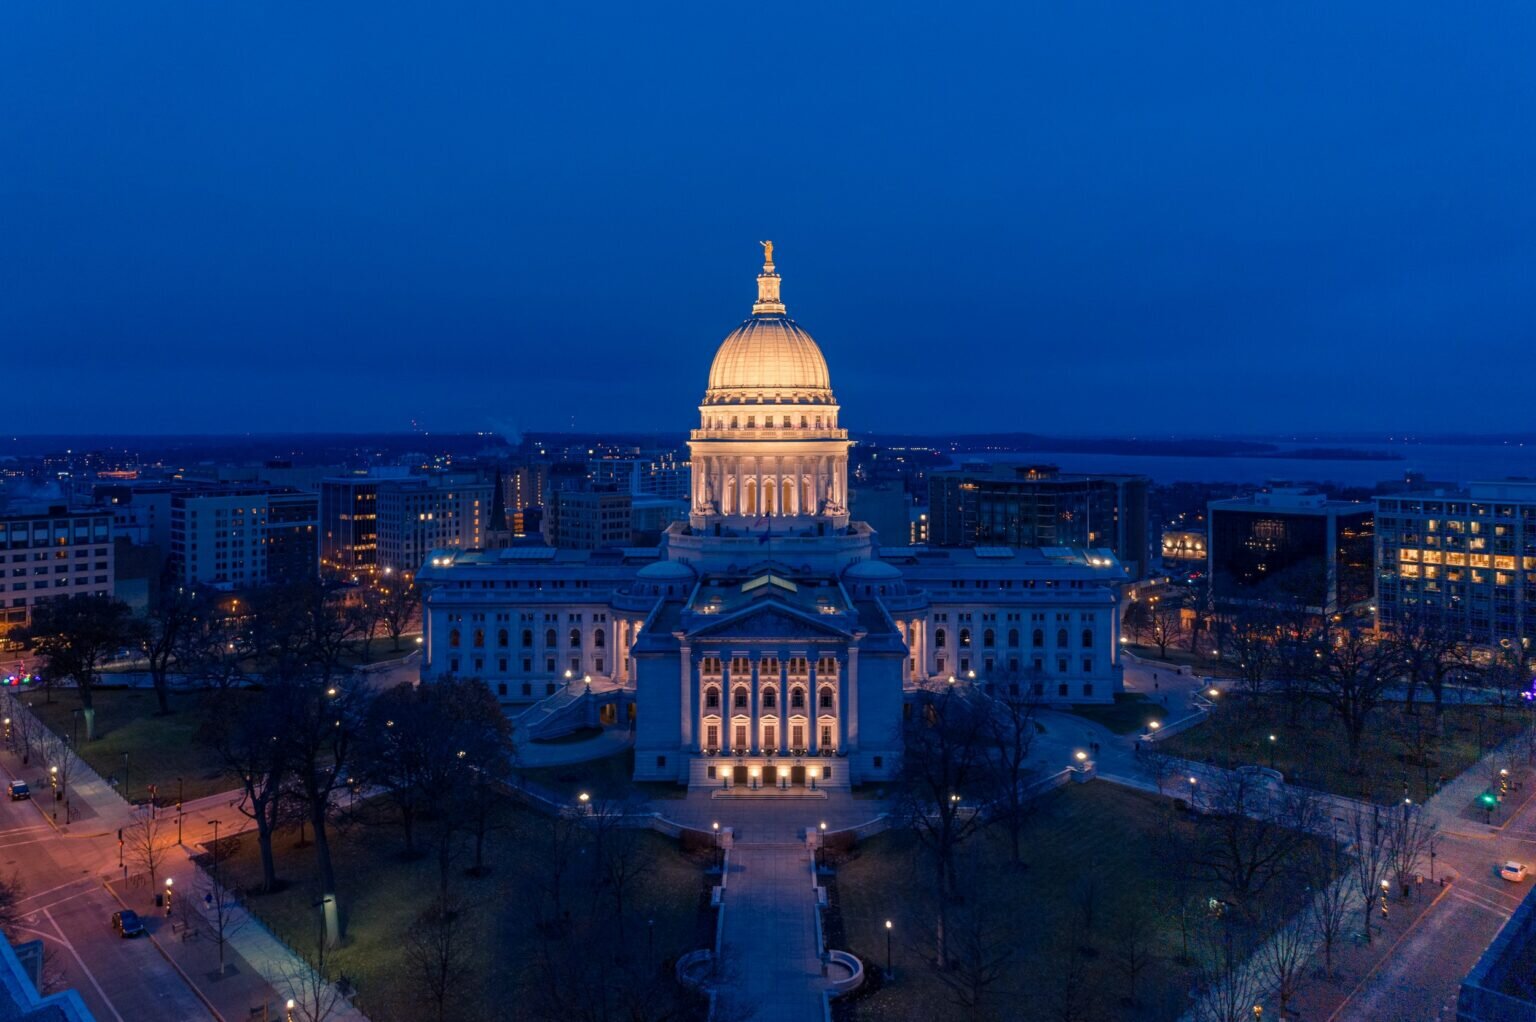 Madison-Capitol-Building-At-Night-1536x1022.jpg